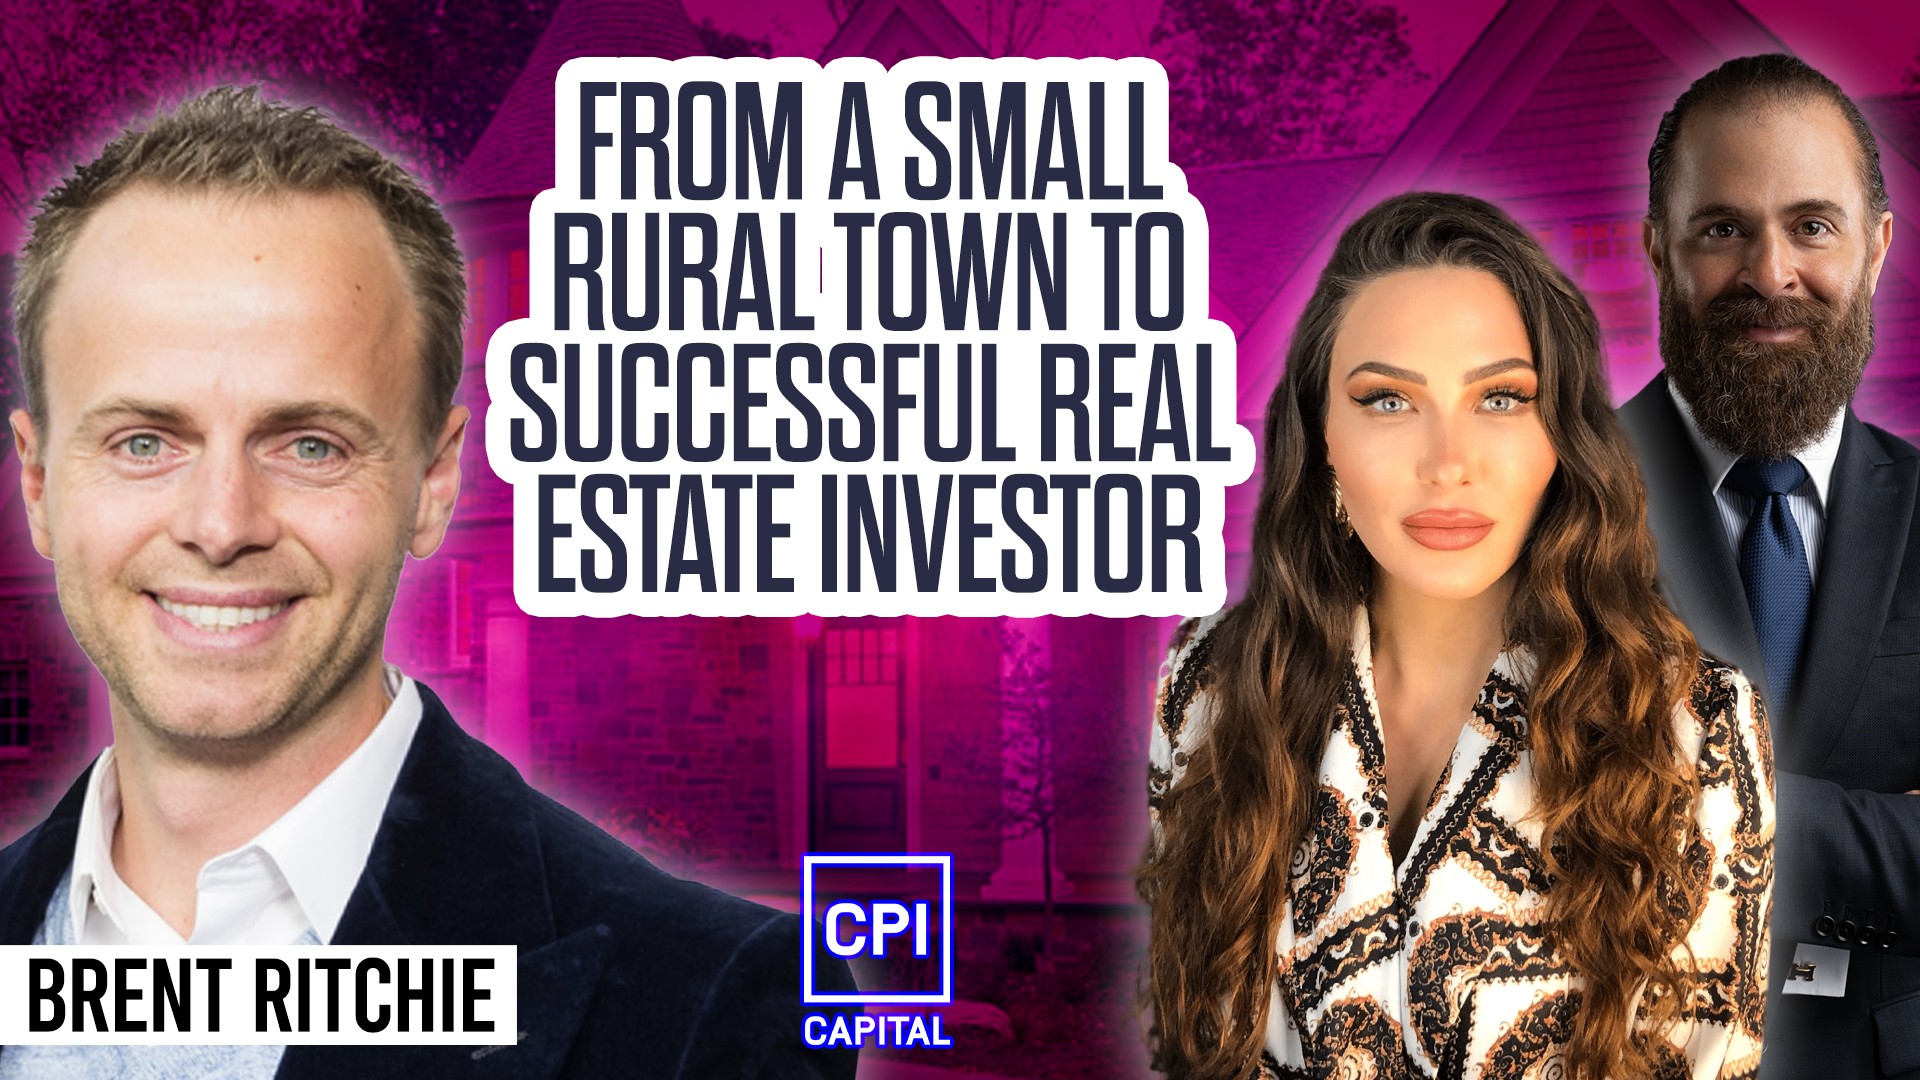 REID Brent Ritchie | Successful Real Estate Investor